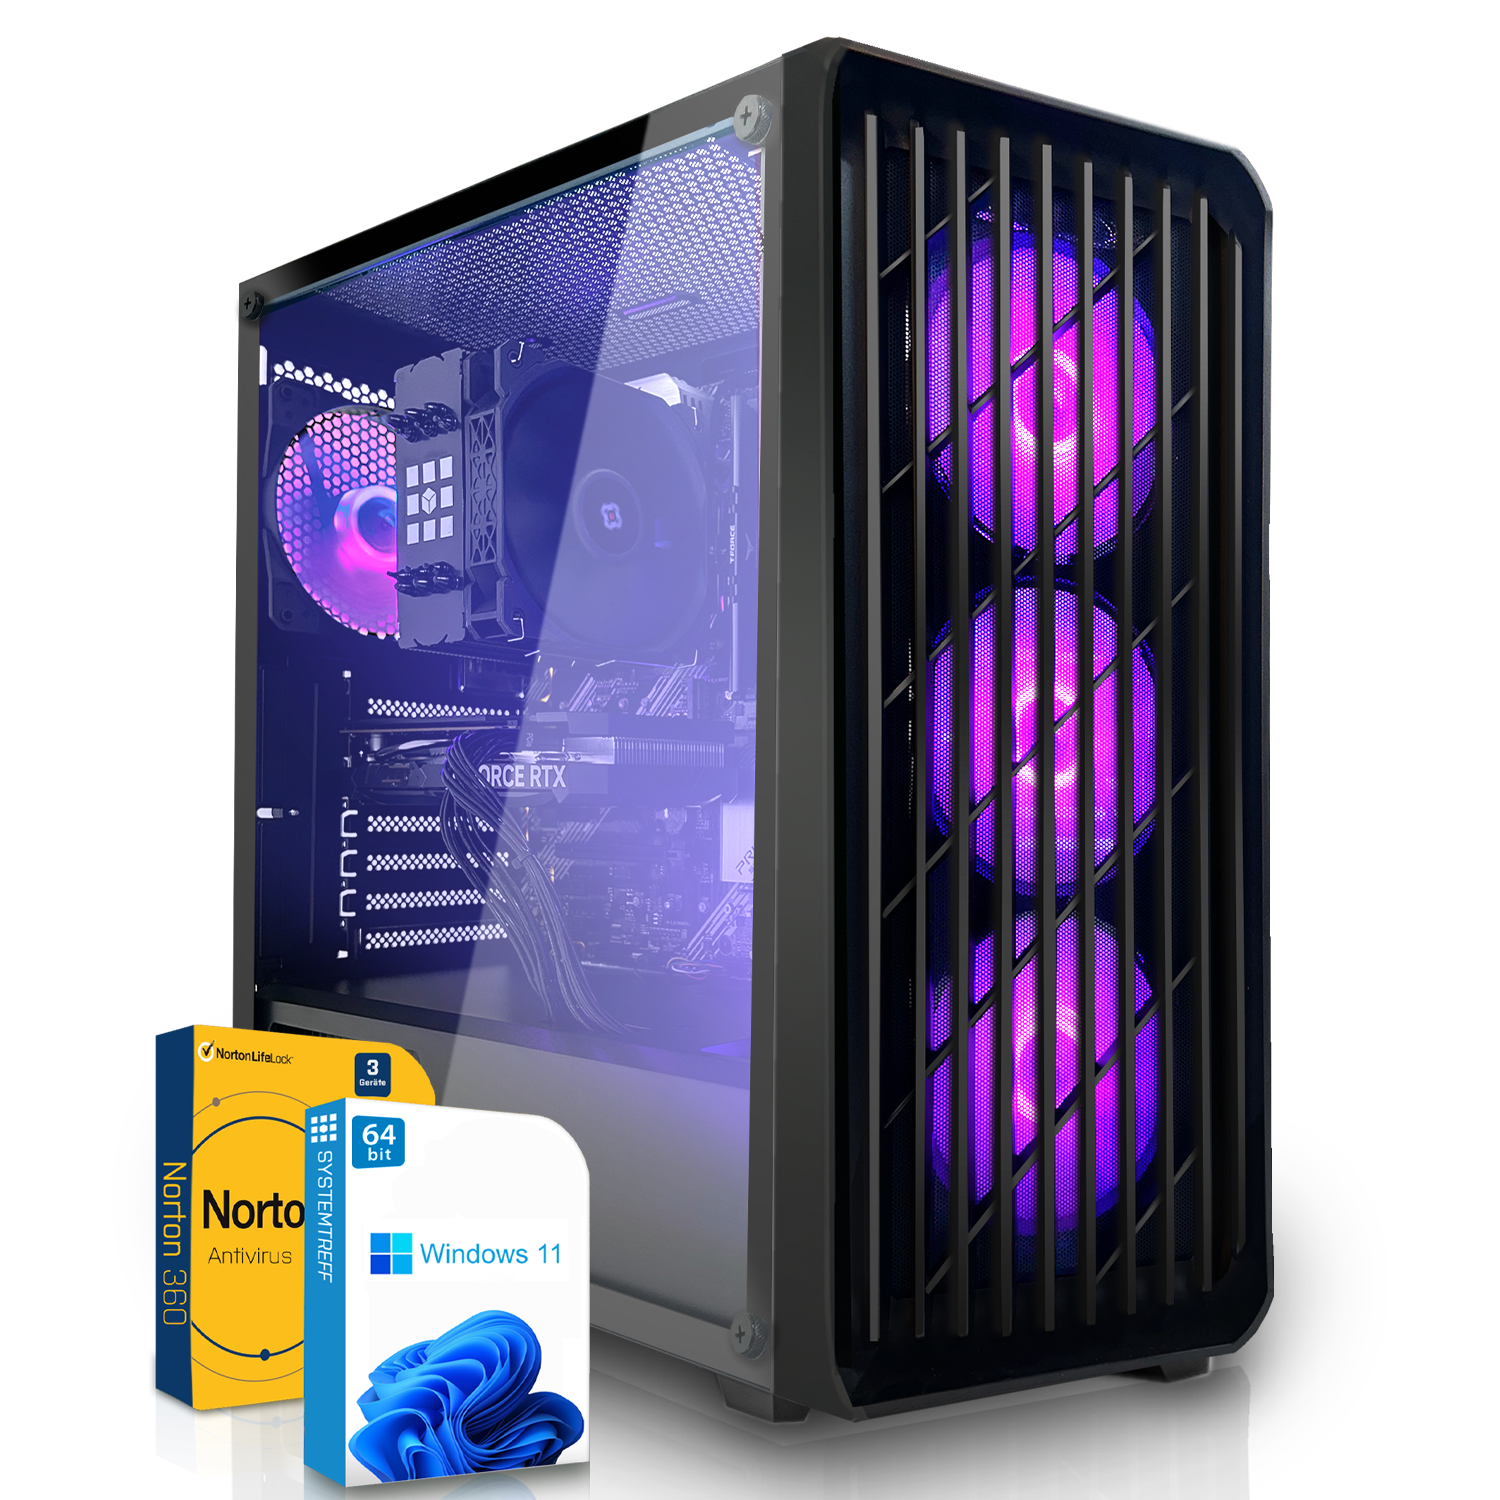 Prozessor, 11 Core™ 3050 SYSTEMTREFF RTX™ GB mSSD, Gaming Gaming Windows GB GeForce Pro, PC mit Intel 512 Core i5 i5-12600K, RAM, NVIDIA 16 Intel®